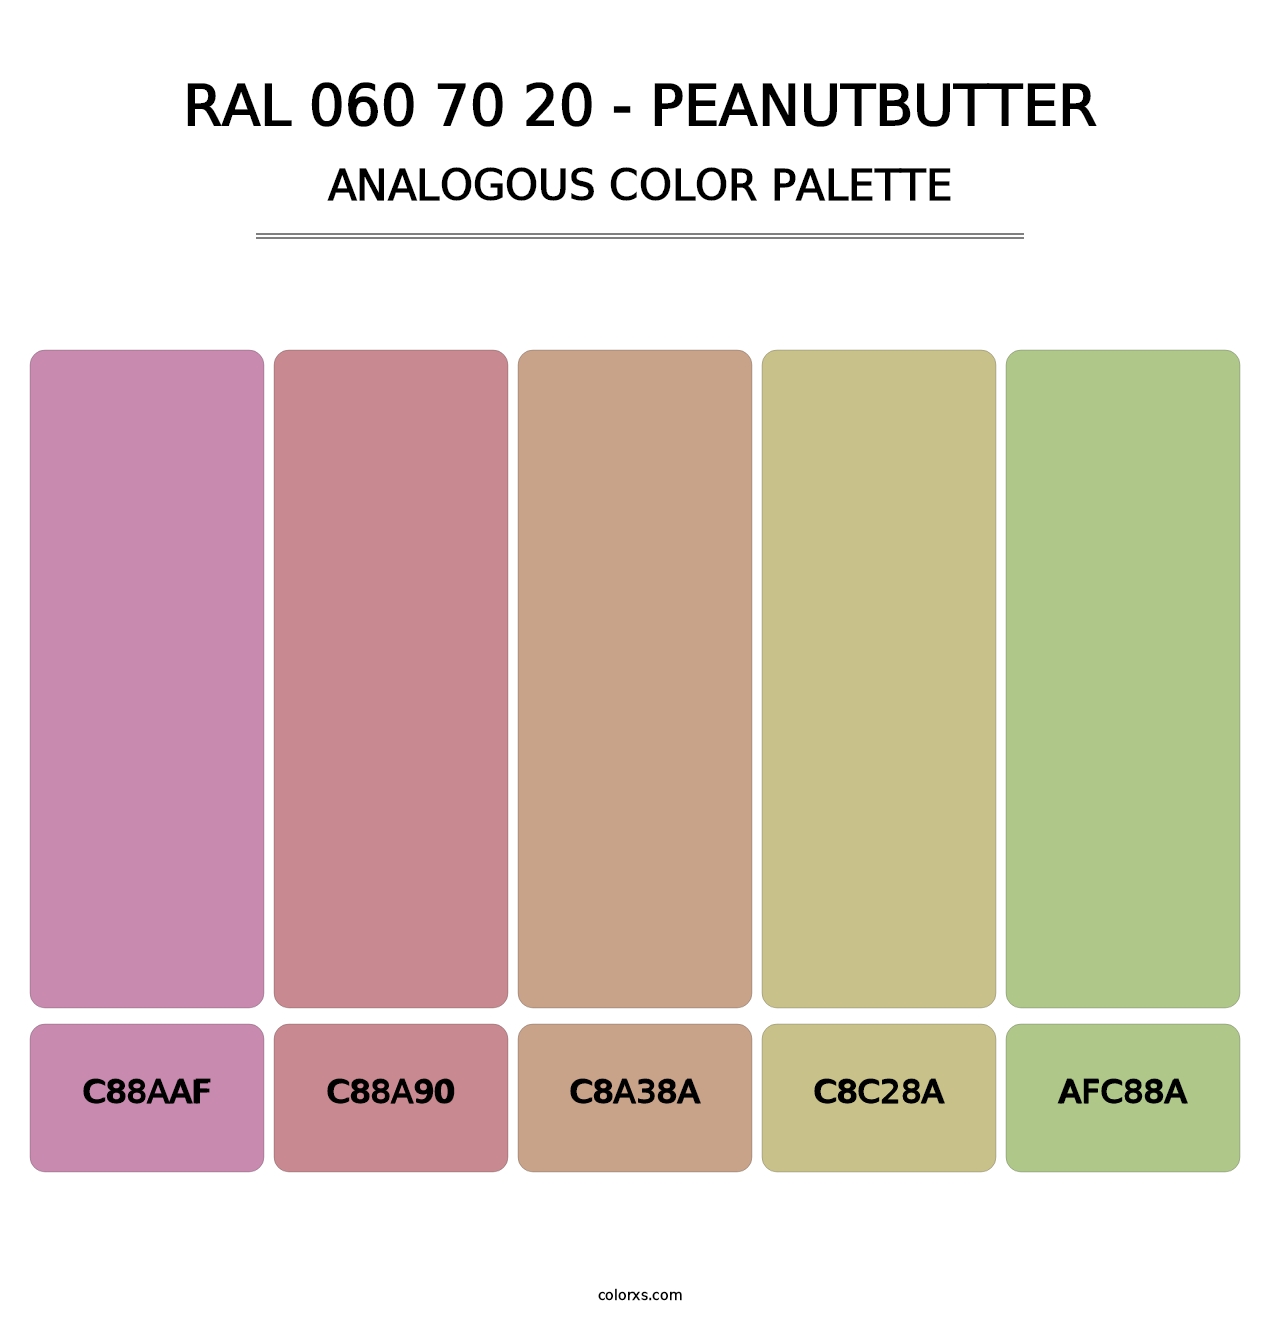 RAL 060 70 20 - Peanutbutter - Analogous Color Palette